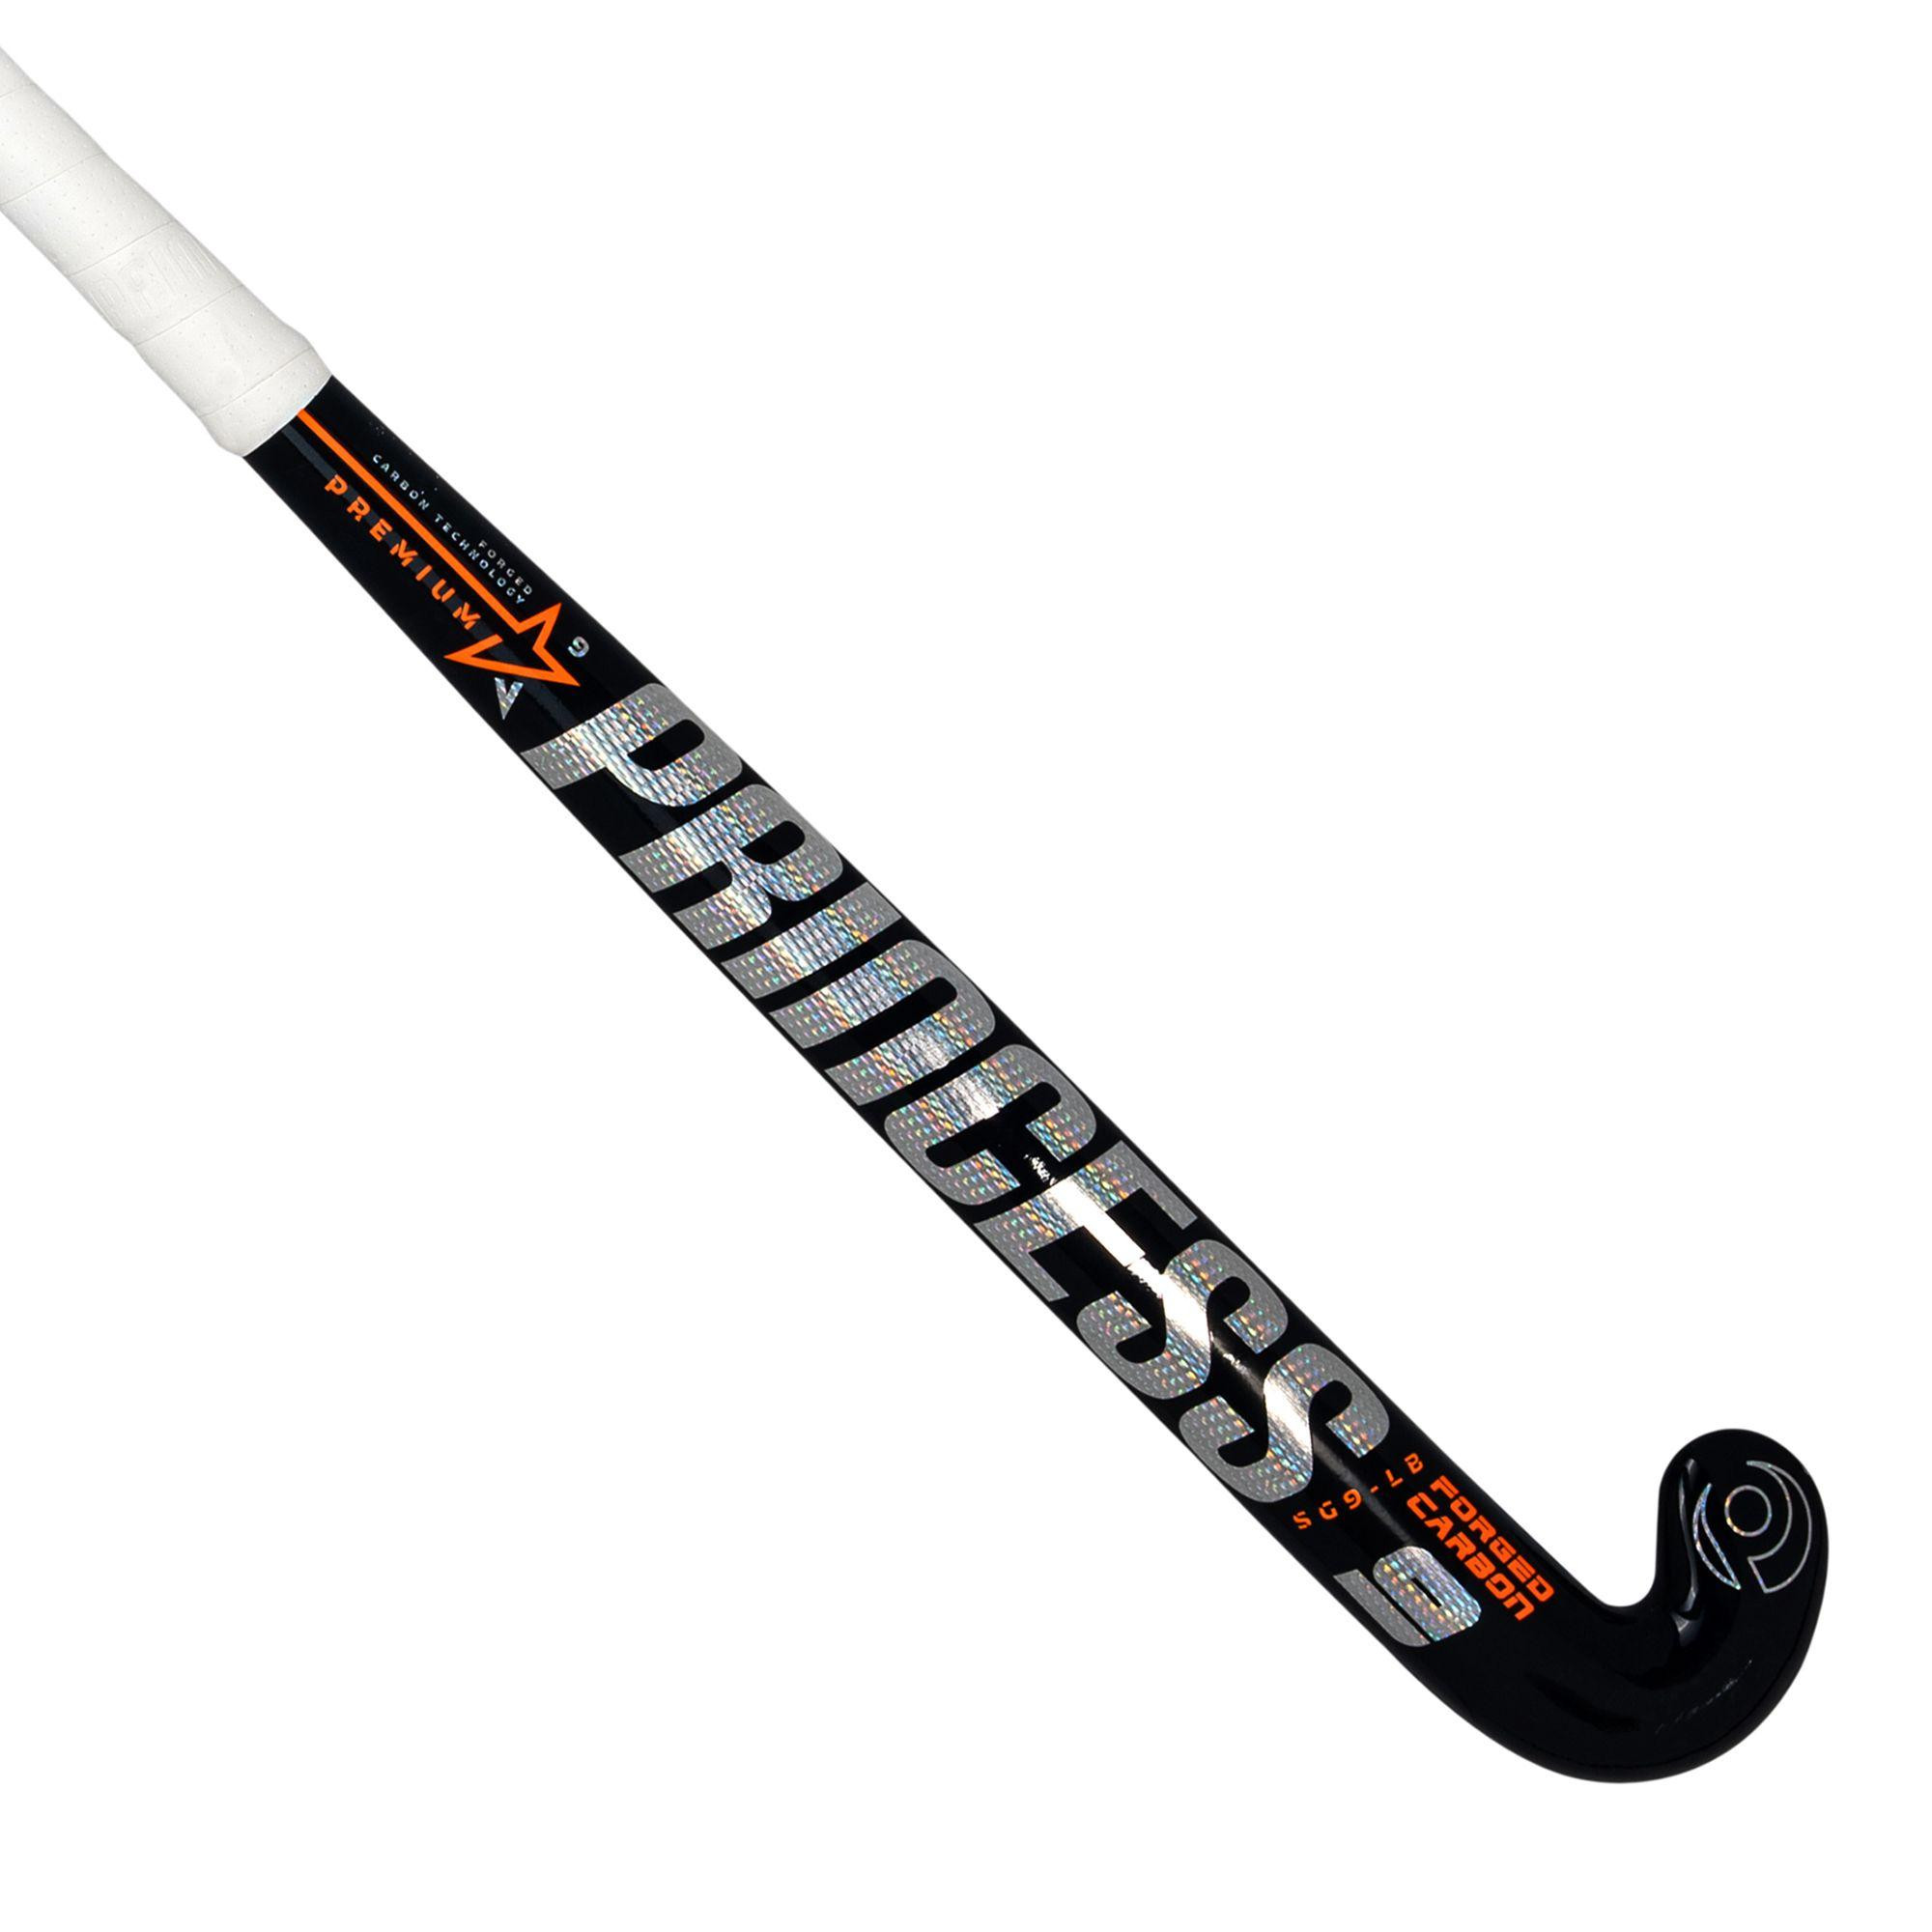 Hockeystick Premium Forged Carbon 9 Star SG9 Lowbow